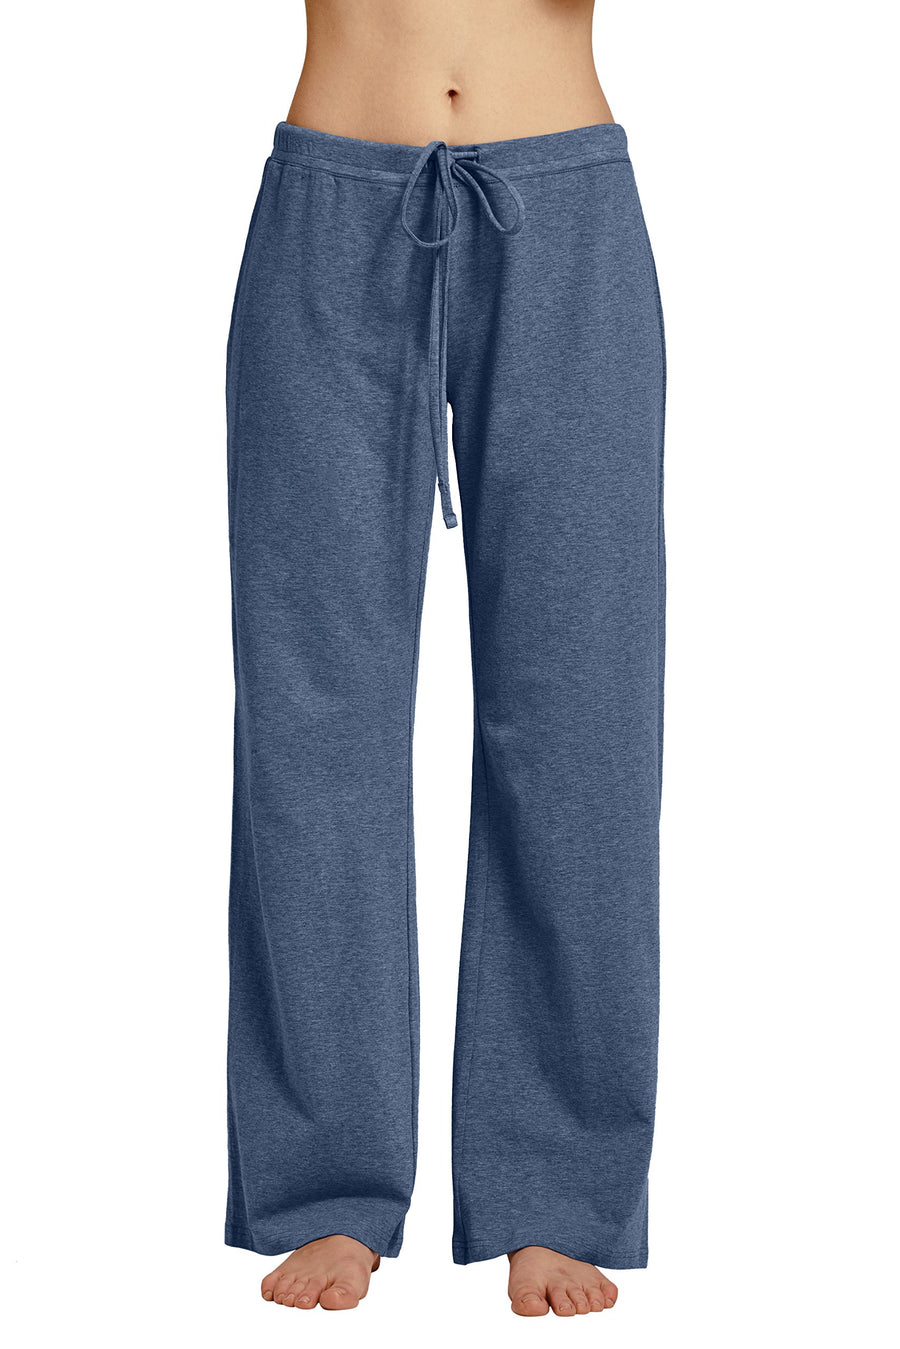 Bolaz Women Pajama Pants Lounge Pants Long Stretch Comfy Sleepwear